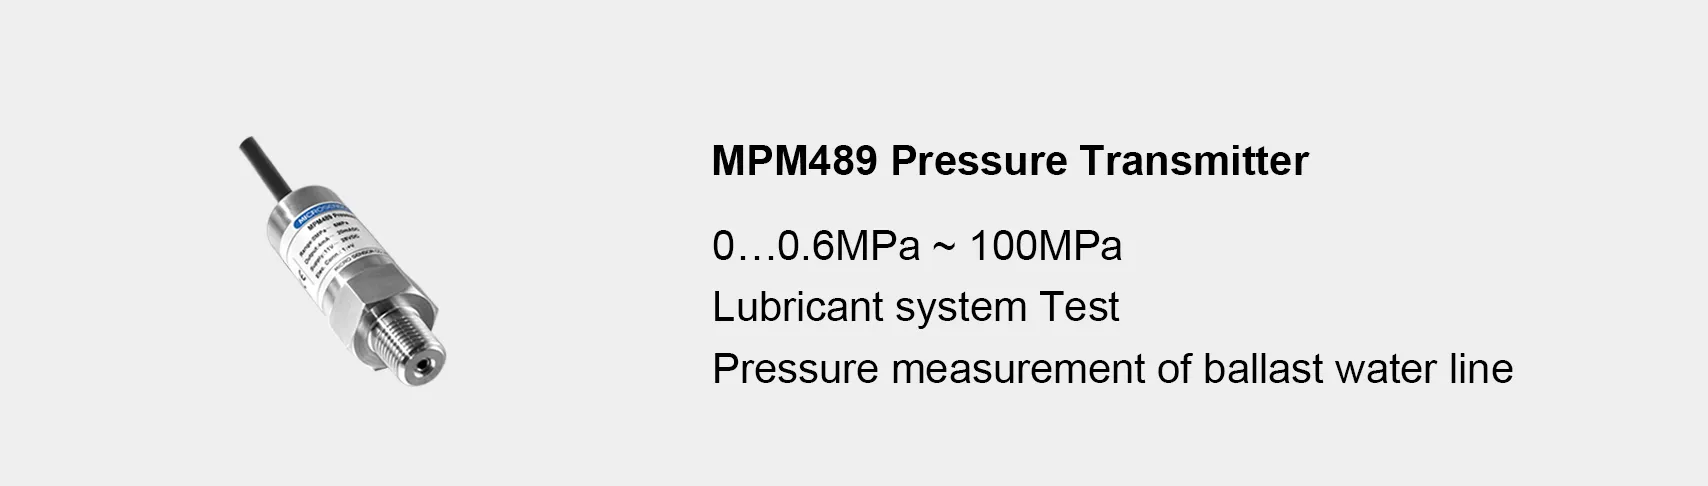 Transmisor de presión ATEX MPM489